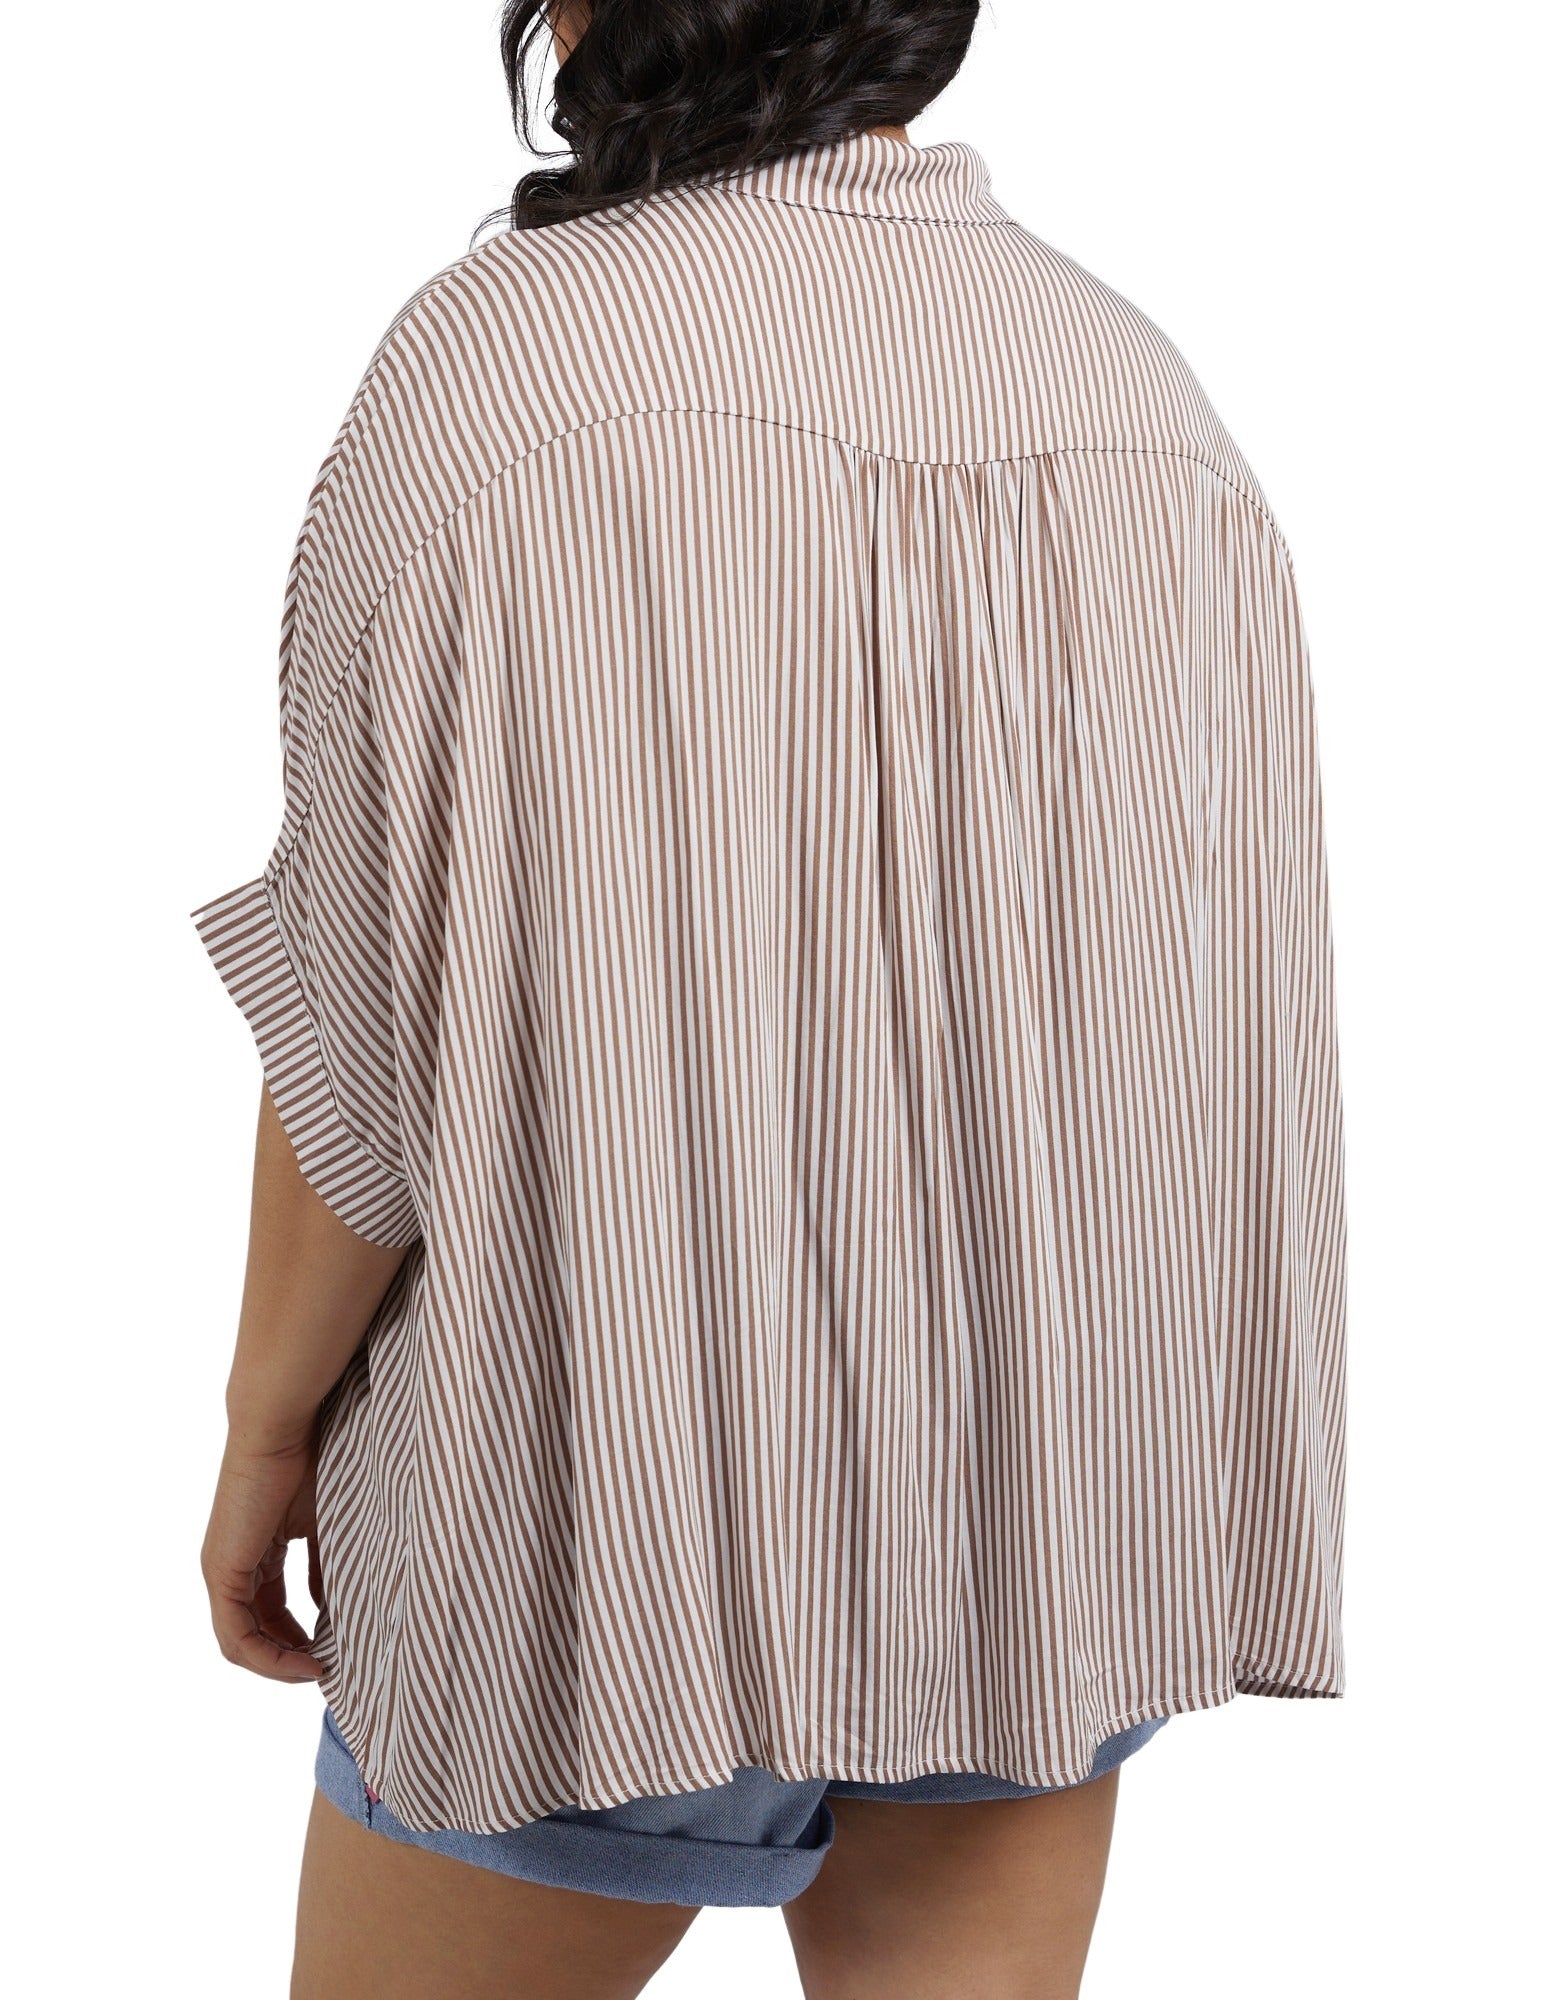 Elm - Luna Shirt - Mocha & White Stripe